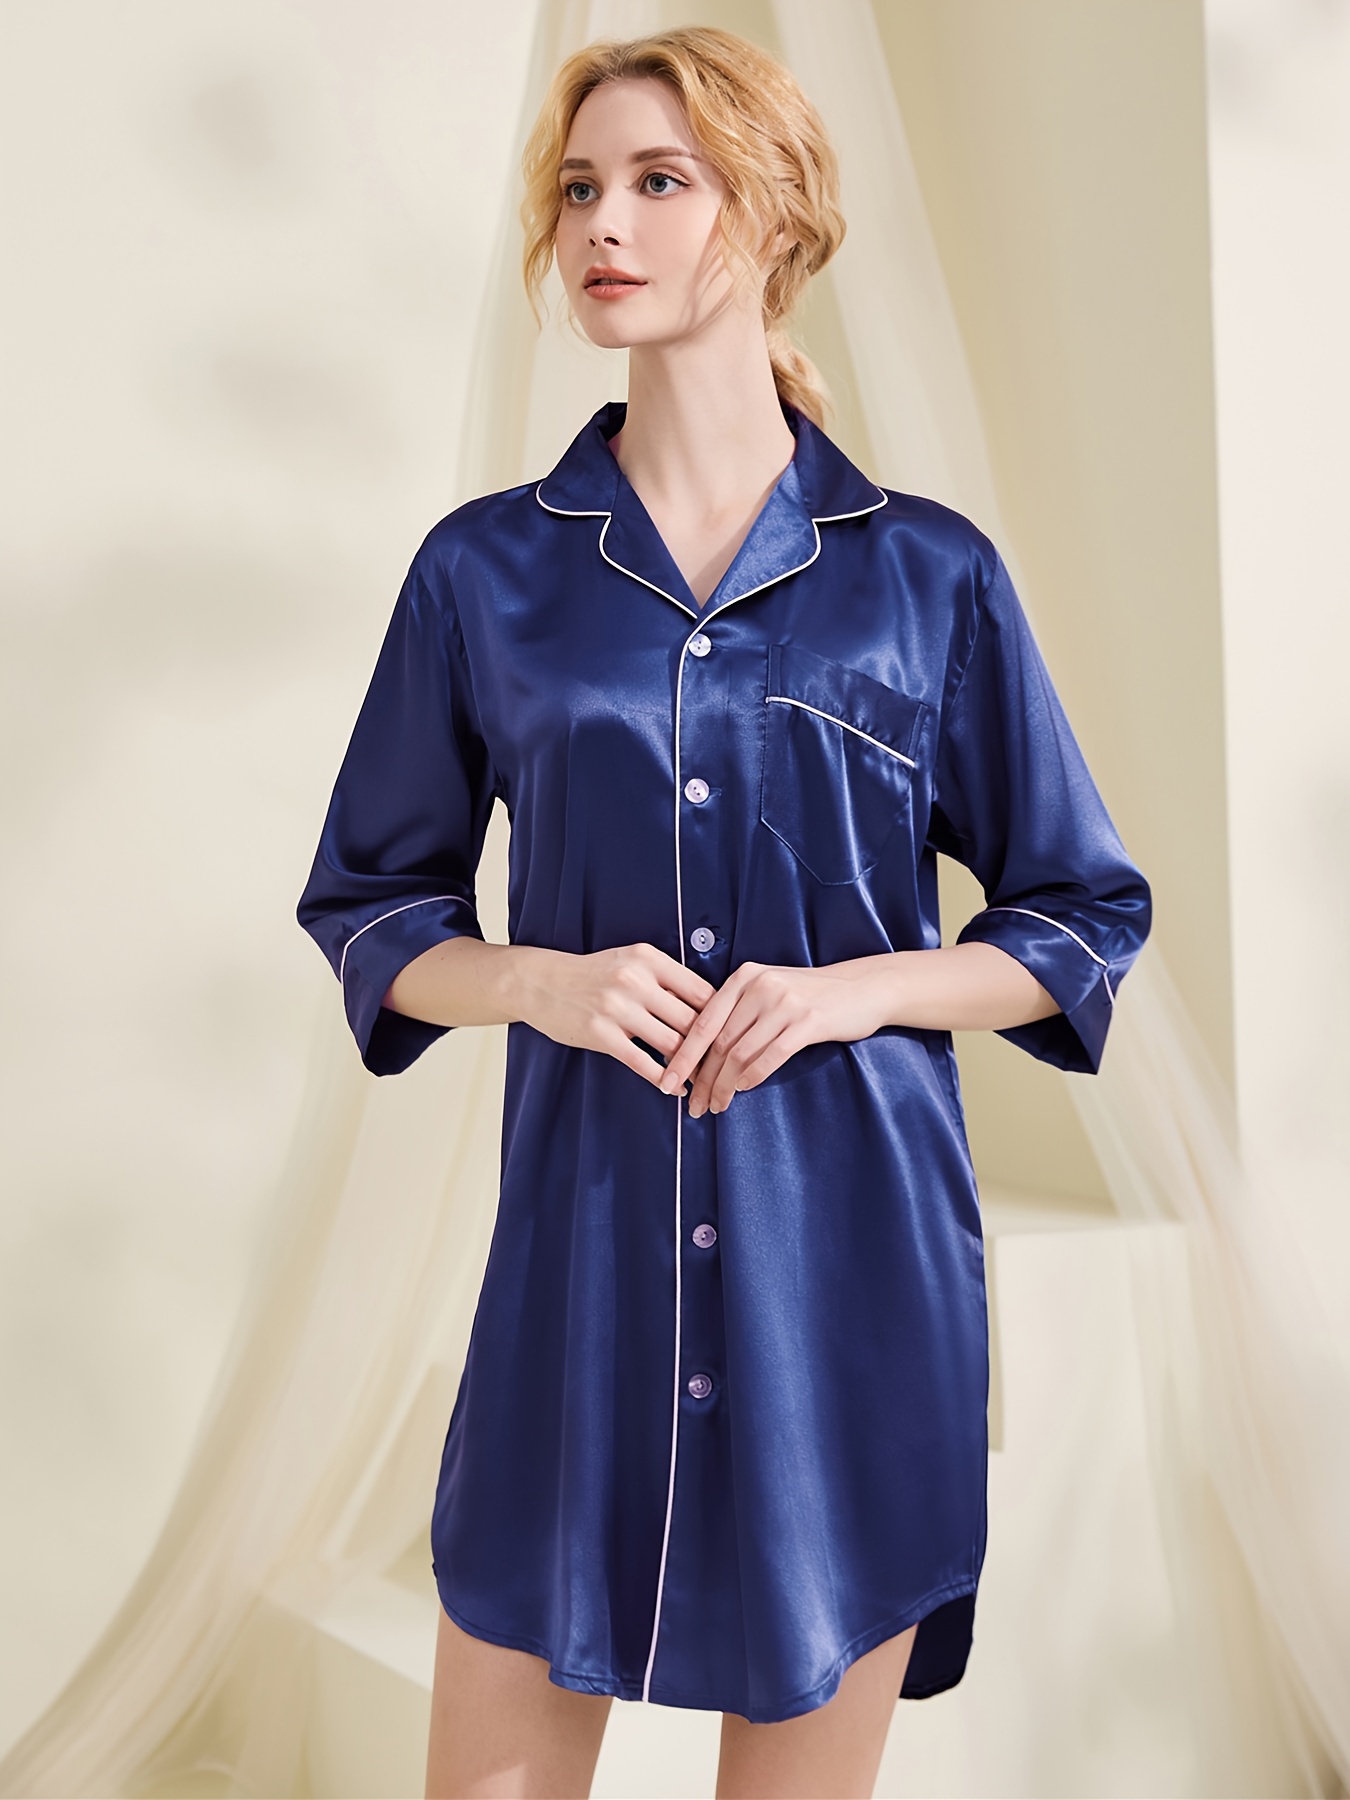  STJDM Nightgown,Summer New Half Sleeve Pajamas Women's